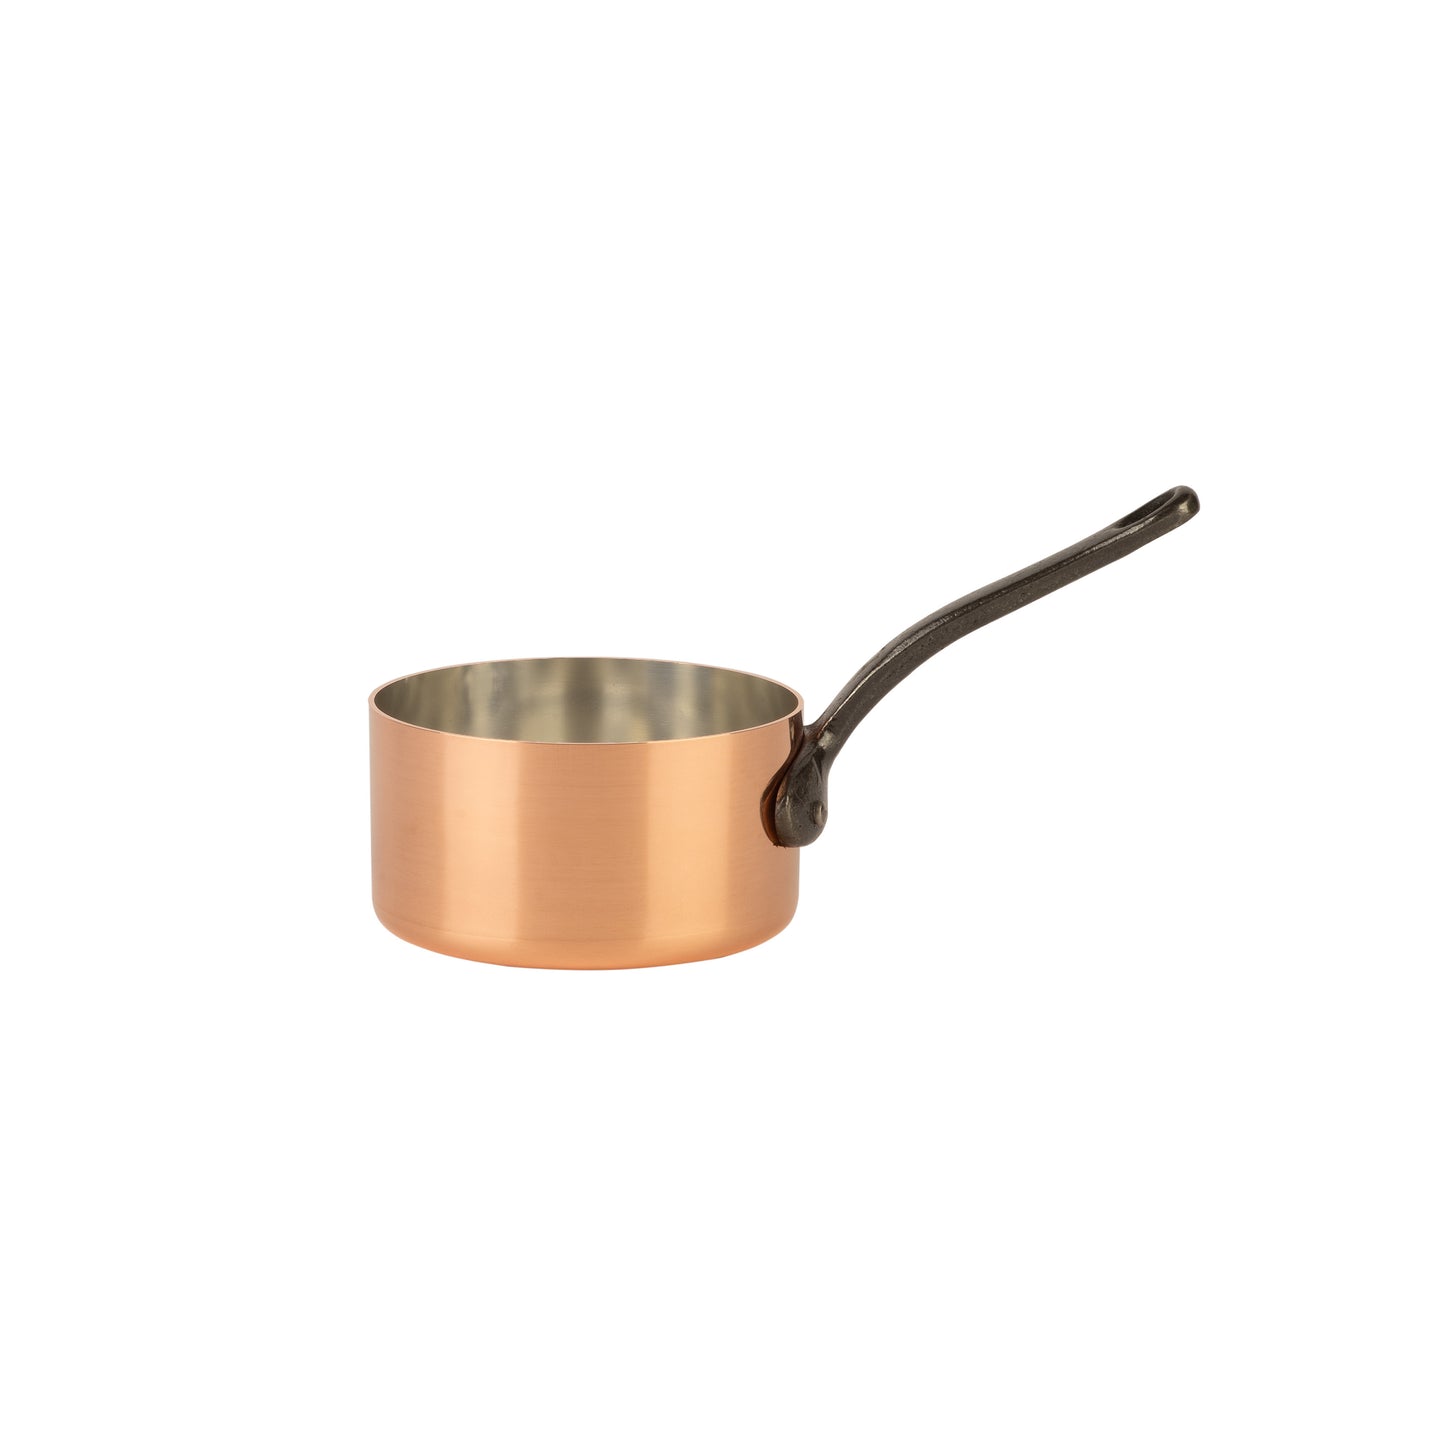 Tinned copper saucepan